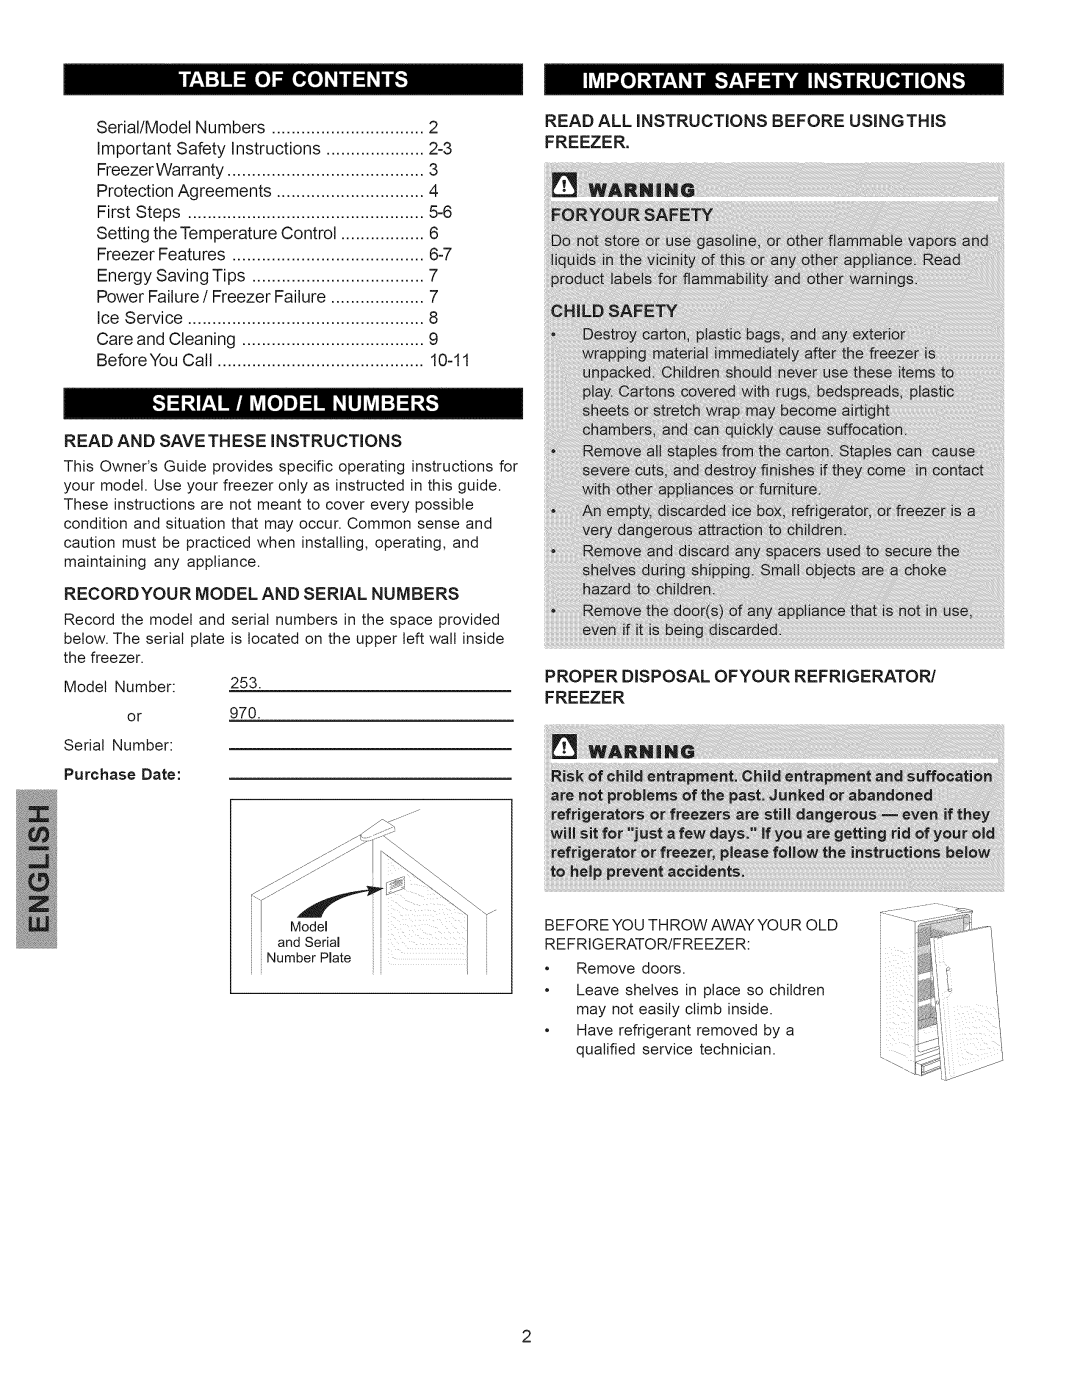 Kenmore 297310600 manual Read Andsavetheseinstructions, Proper Disposal Ofyour Refrigerator Freezer 